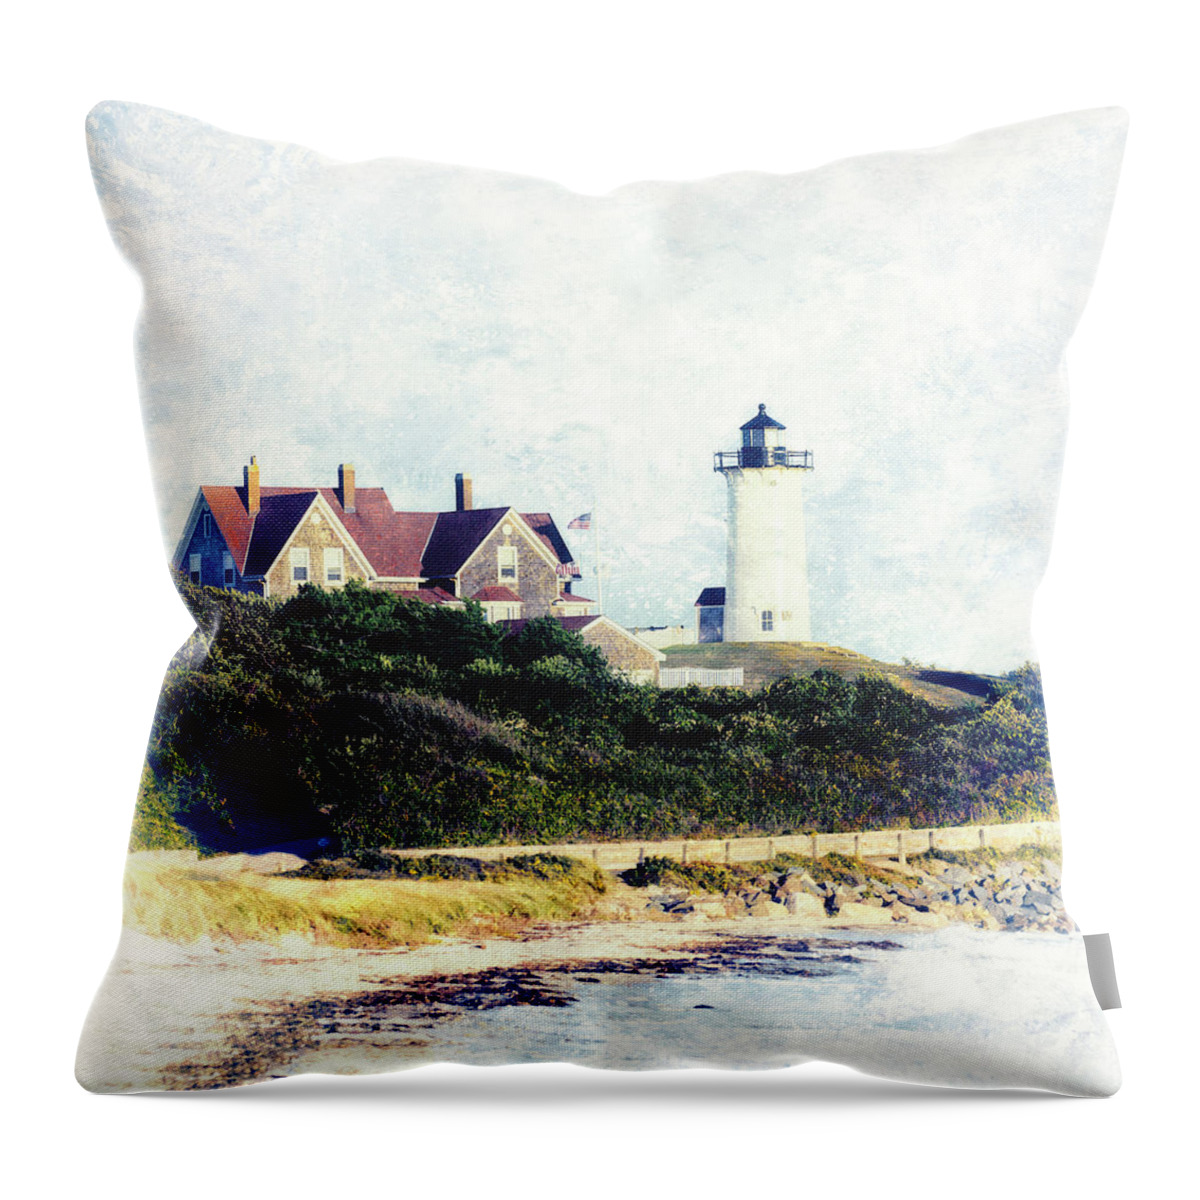 Nobska Lighthouse Throw Pillow featuring the mixed media Nobska Lighthouse Cape Cod Massachusetts retro style by Marianne Campolongo